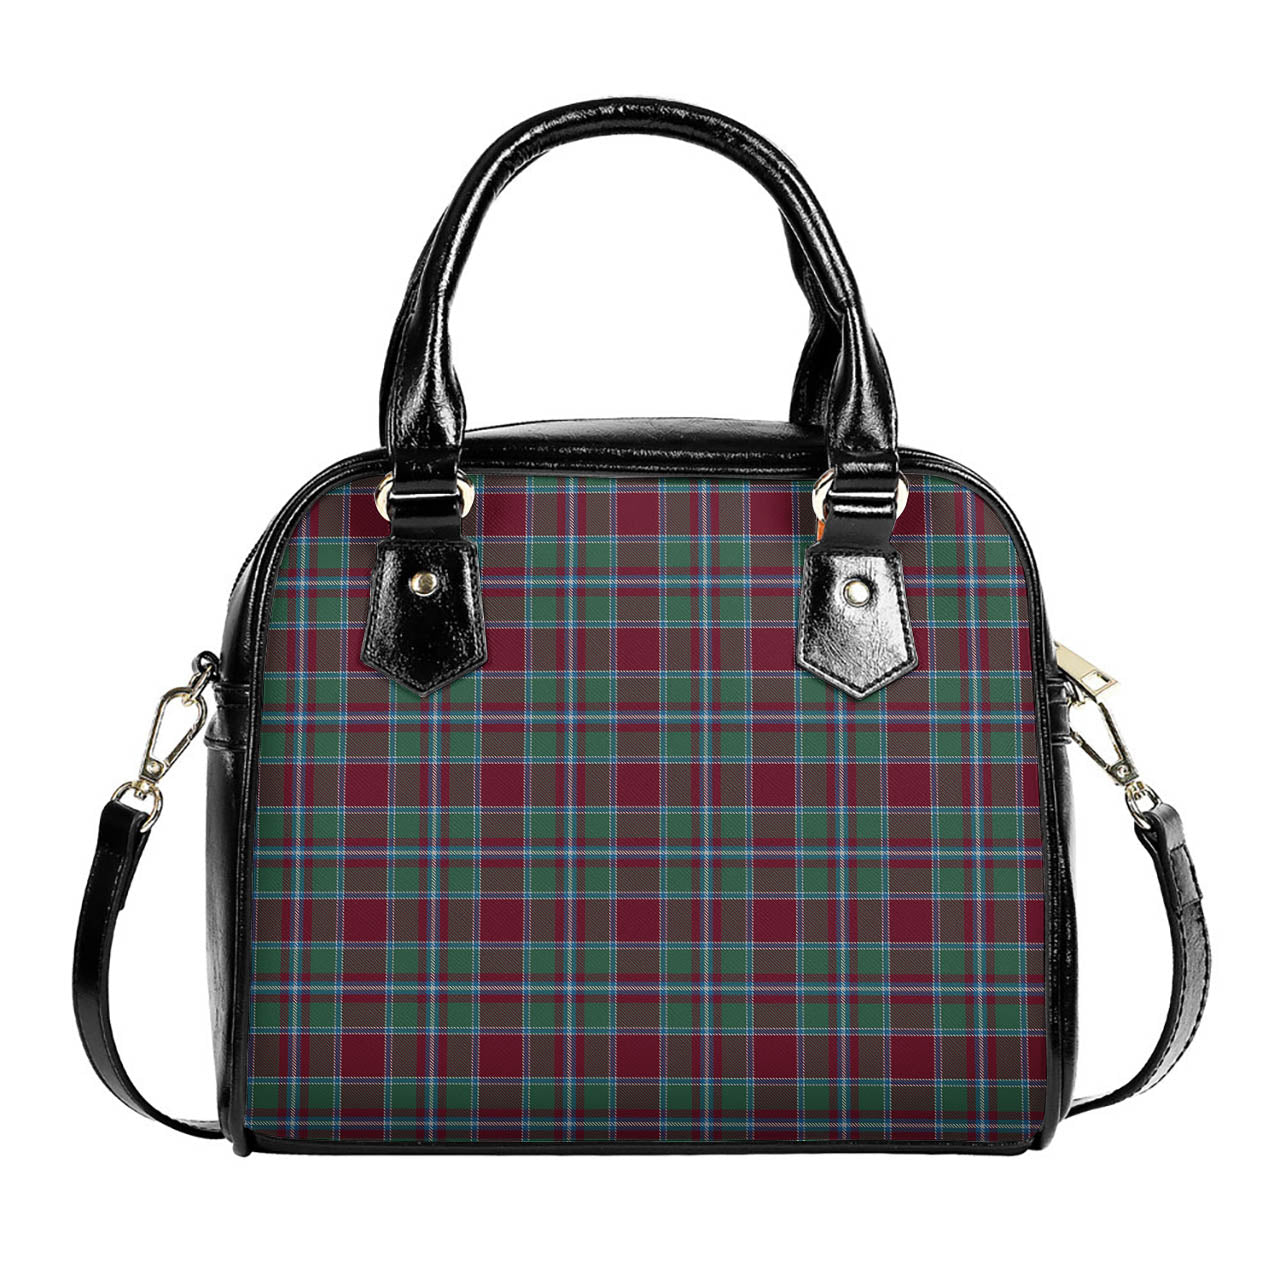 Spens (Spence) Tartan Shoulder Handbags One Size 6*25*22 cm - Tartanvibesclothing